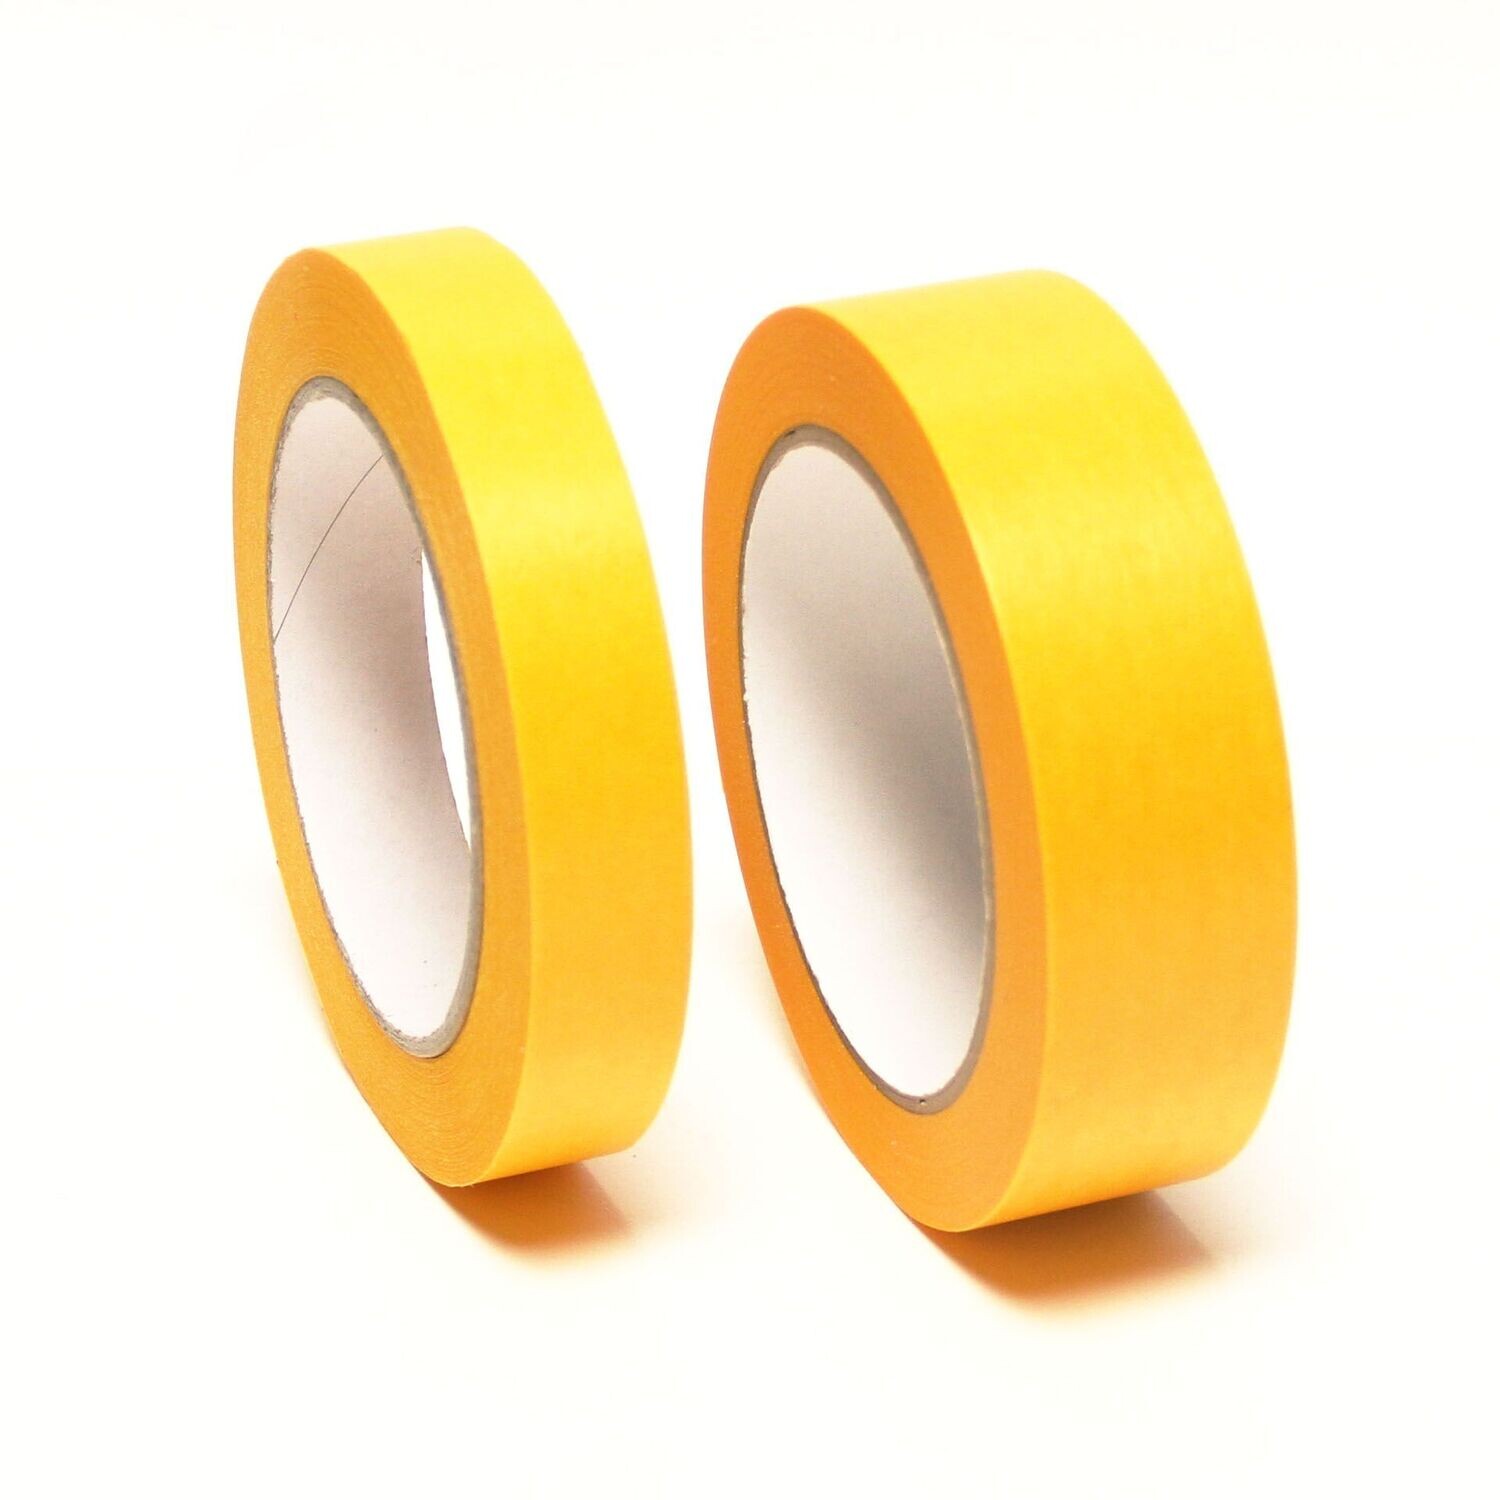 Goldband Soft-Tape E17 Gold